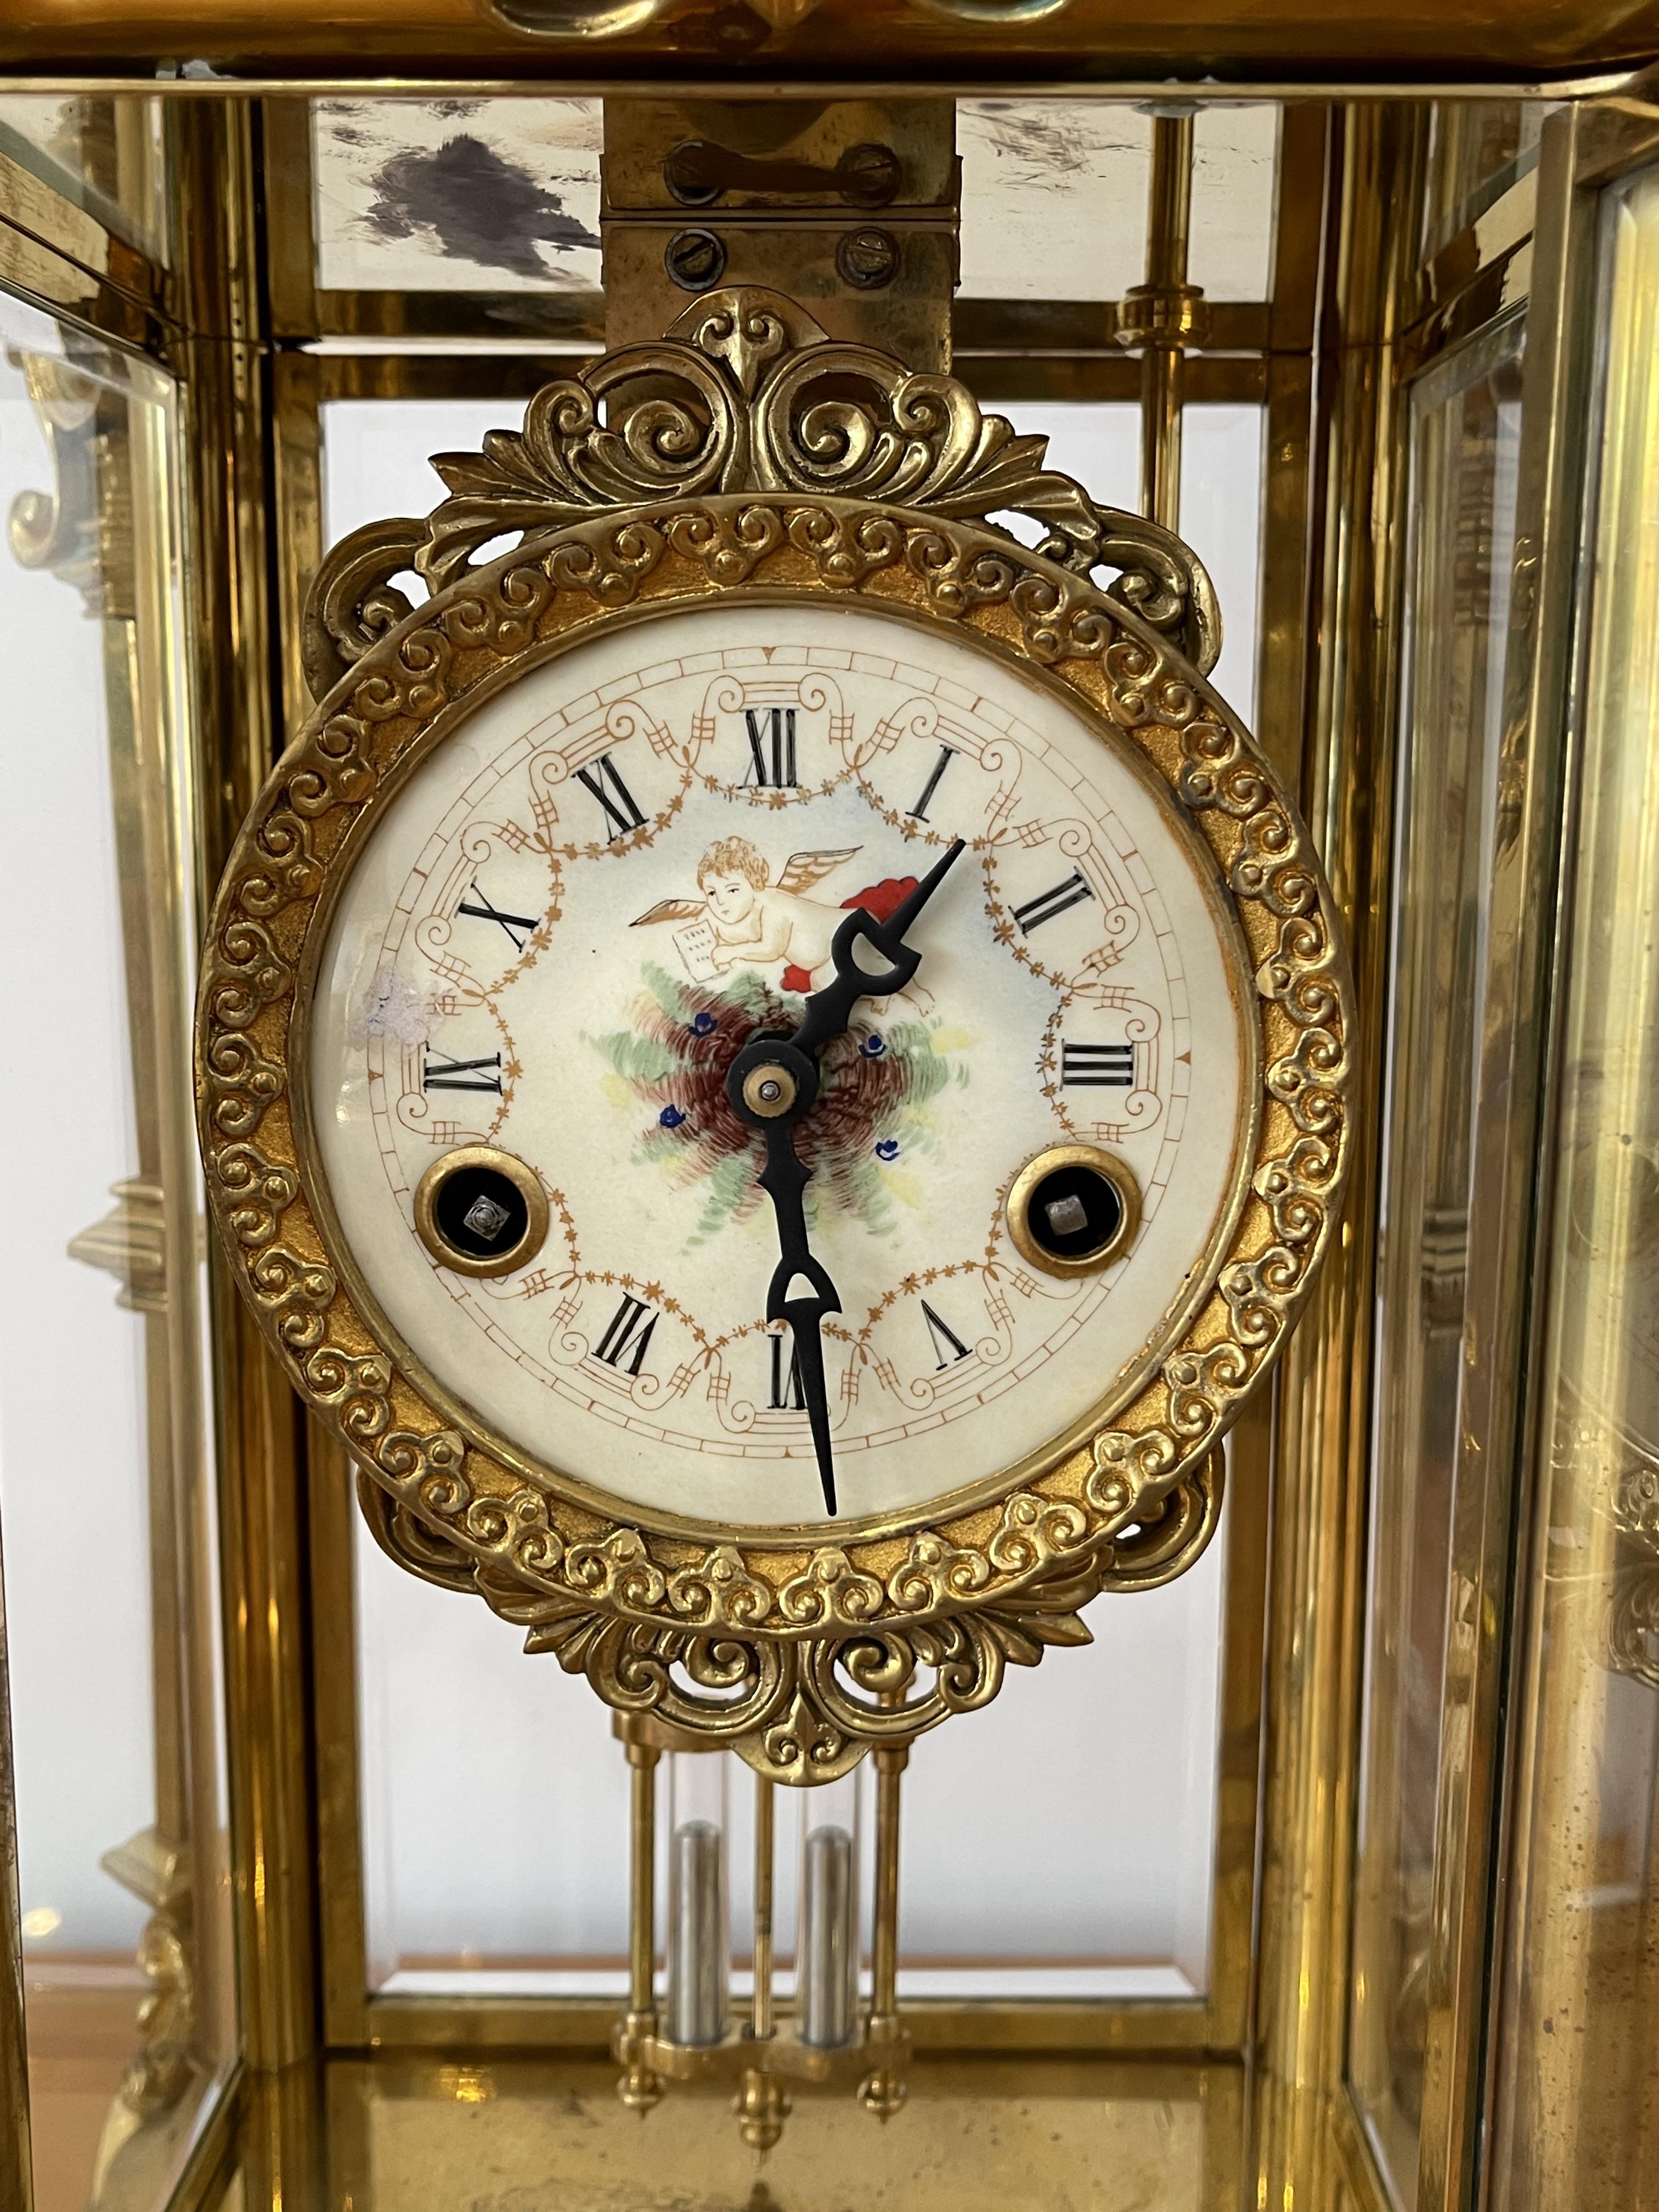 Stunning 8 Day Striking Brass Four Glass Ansonia Mantel Clock - Image 19 of 21